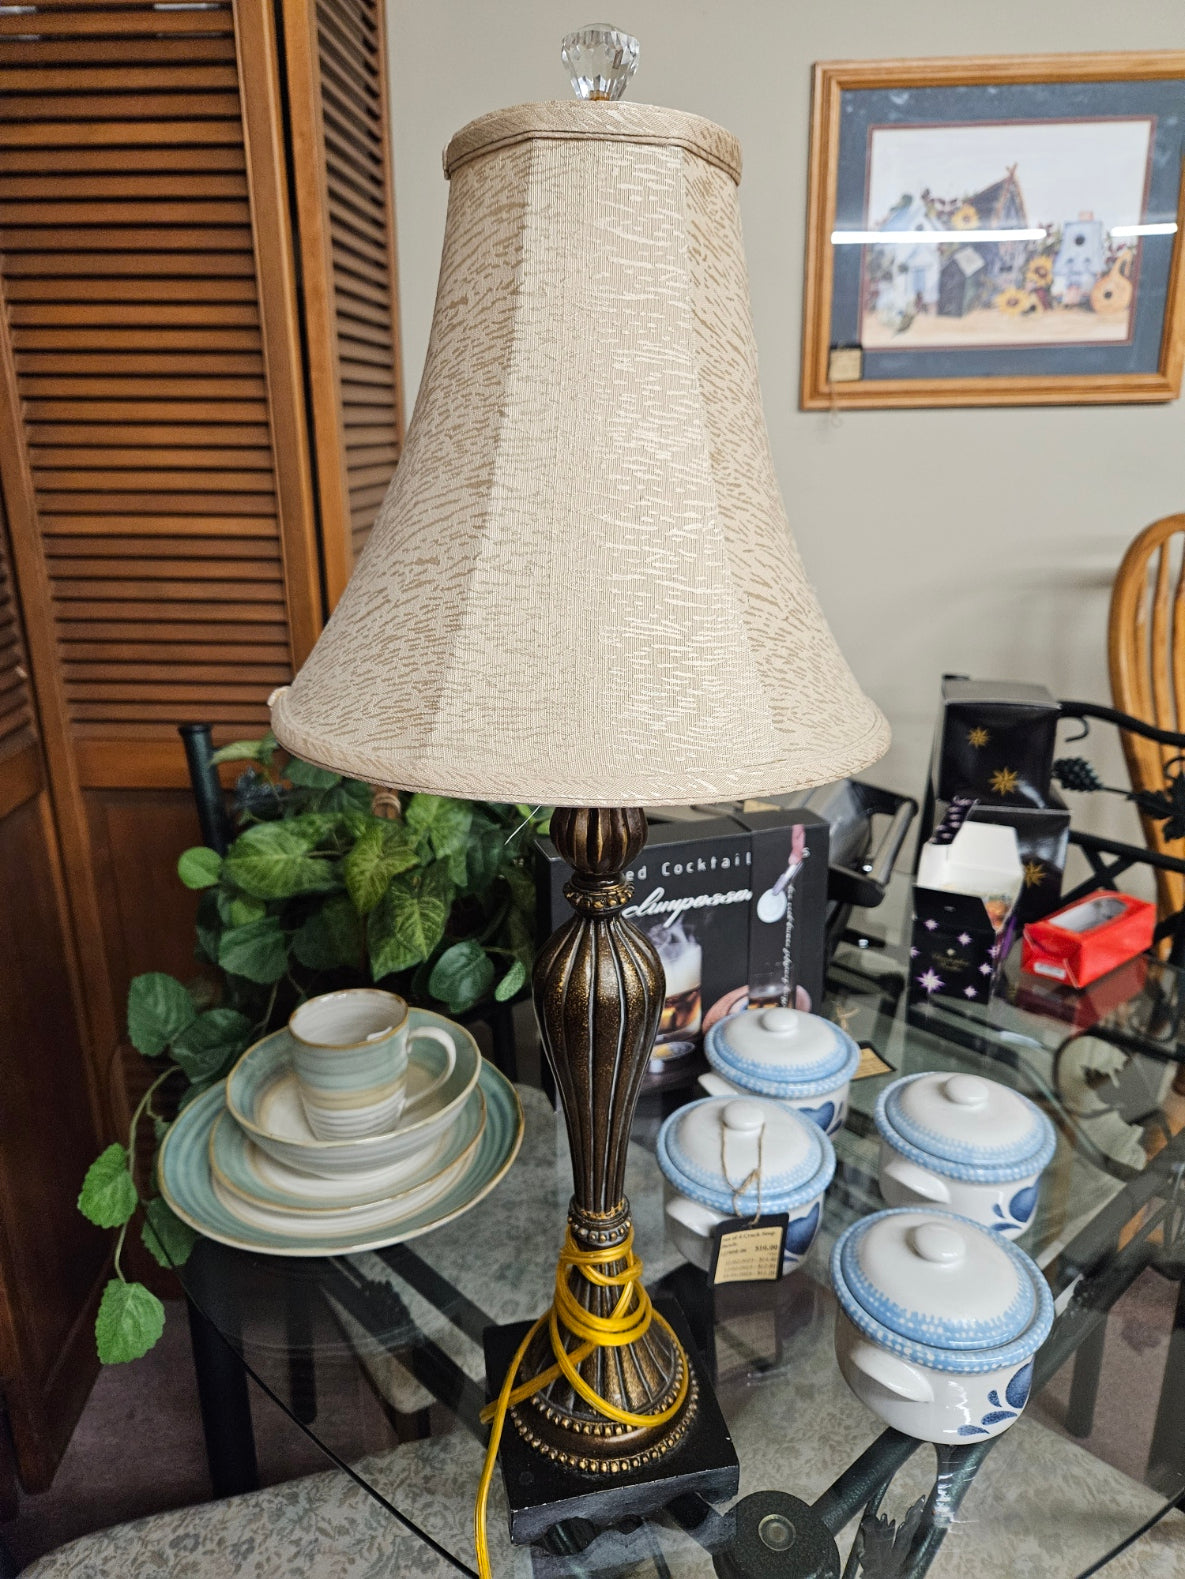 Table Lamp w/ Shade